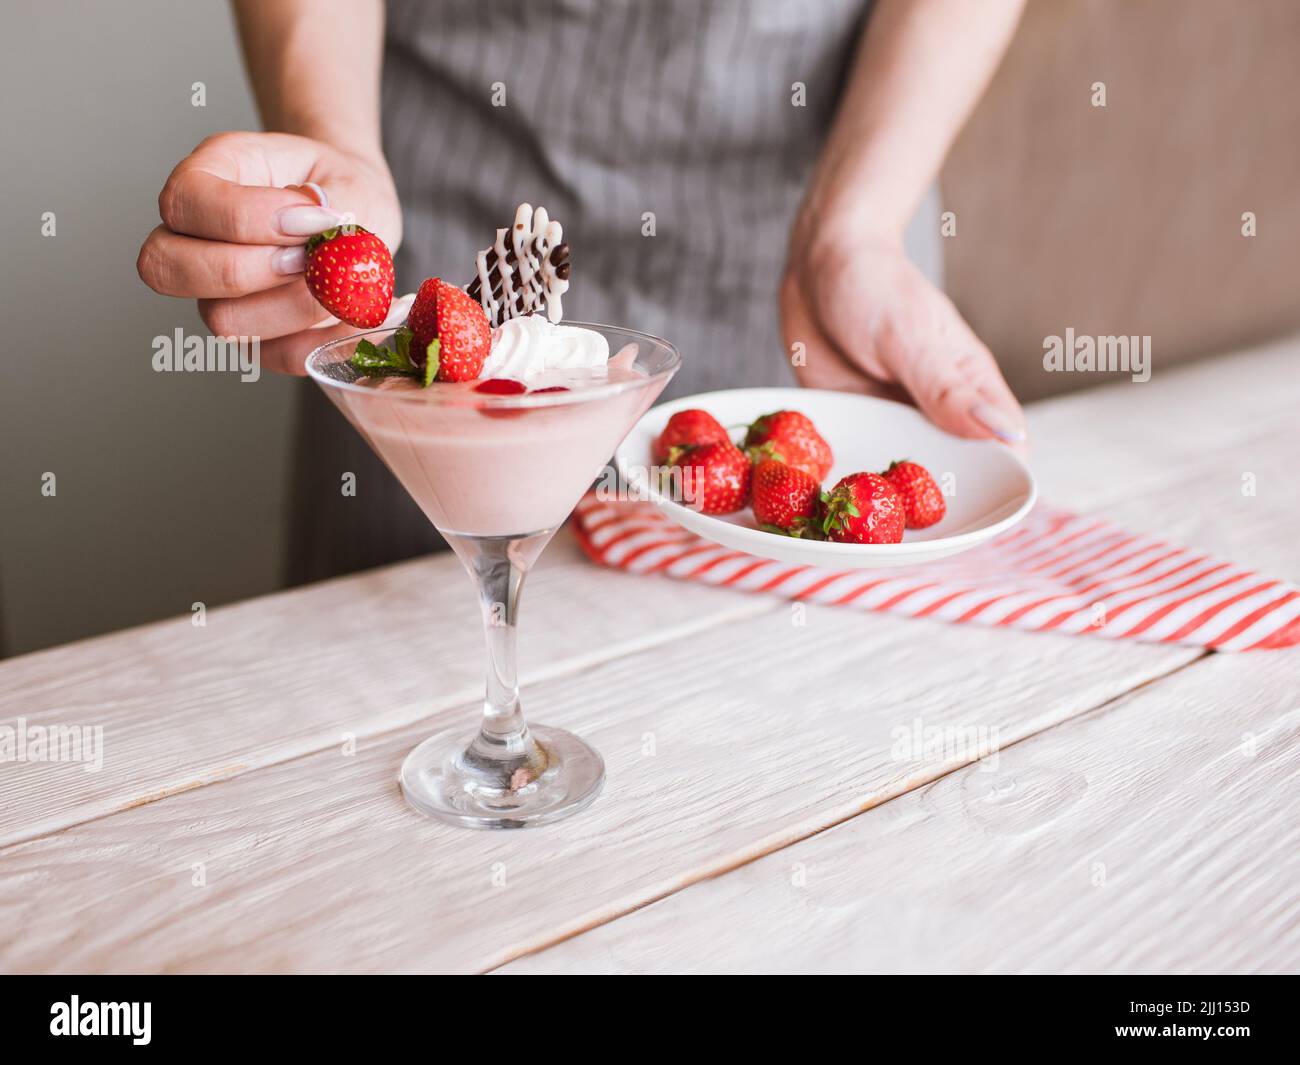 Creamy strawberry dessert in process of decoration Stock Photo